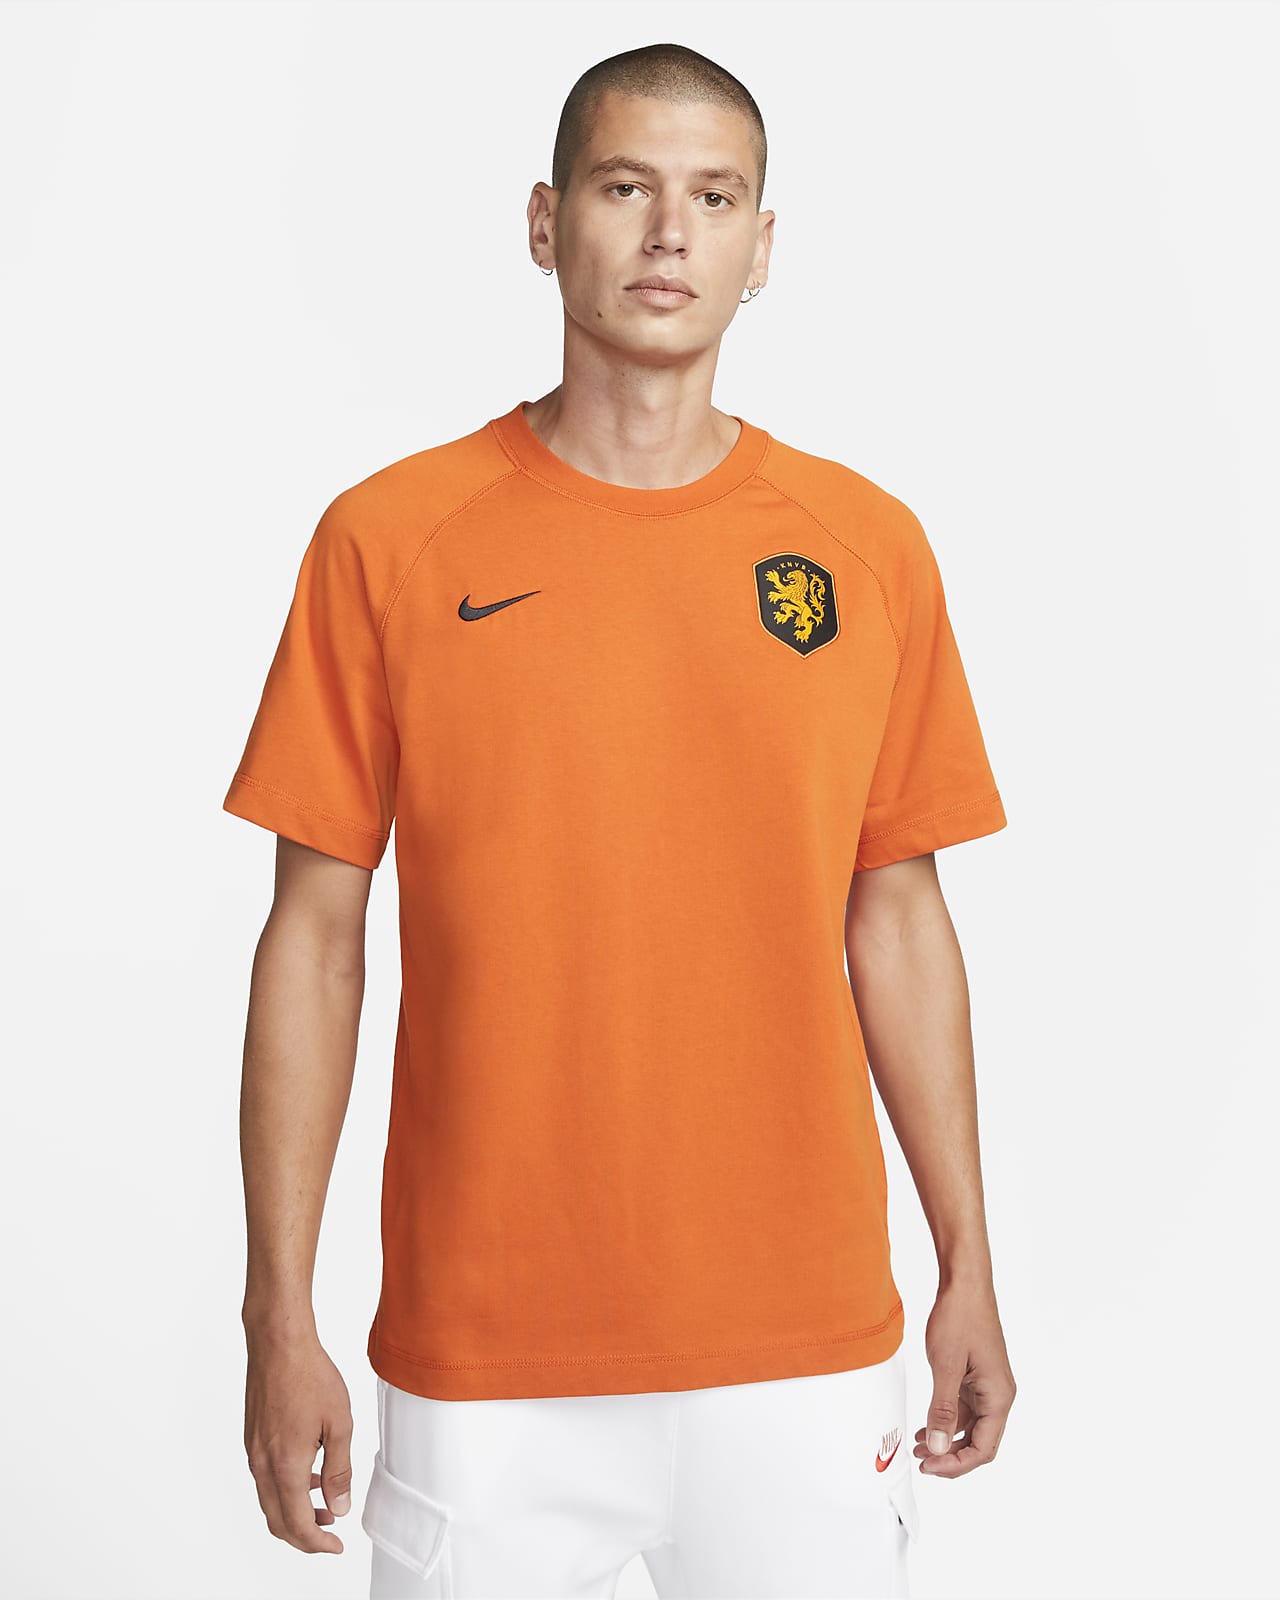 Netherlands Men's Nike Football Top